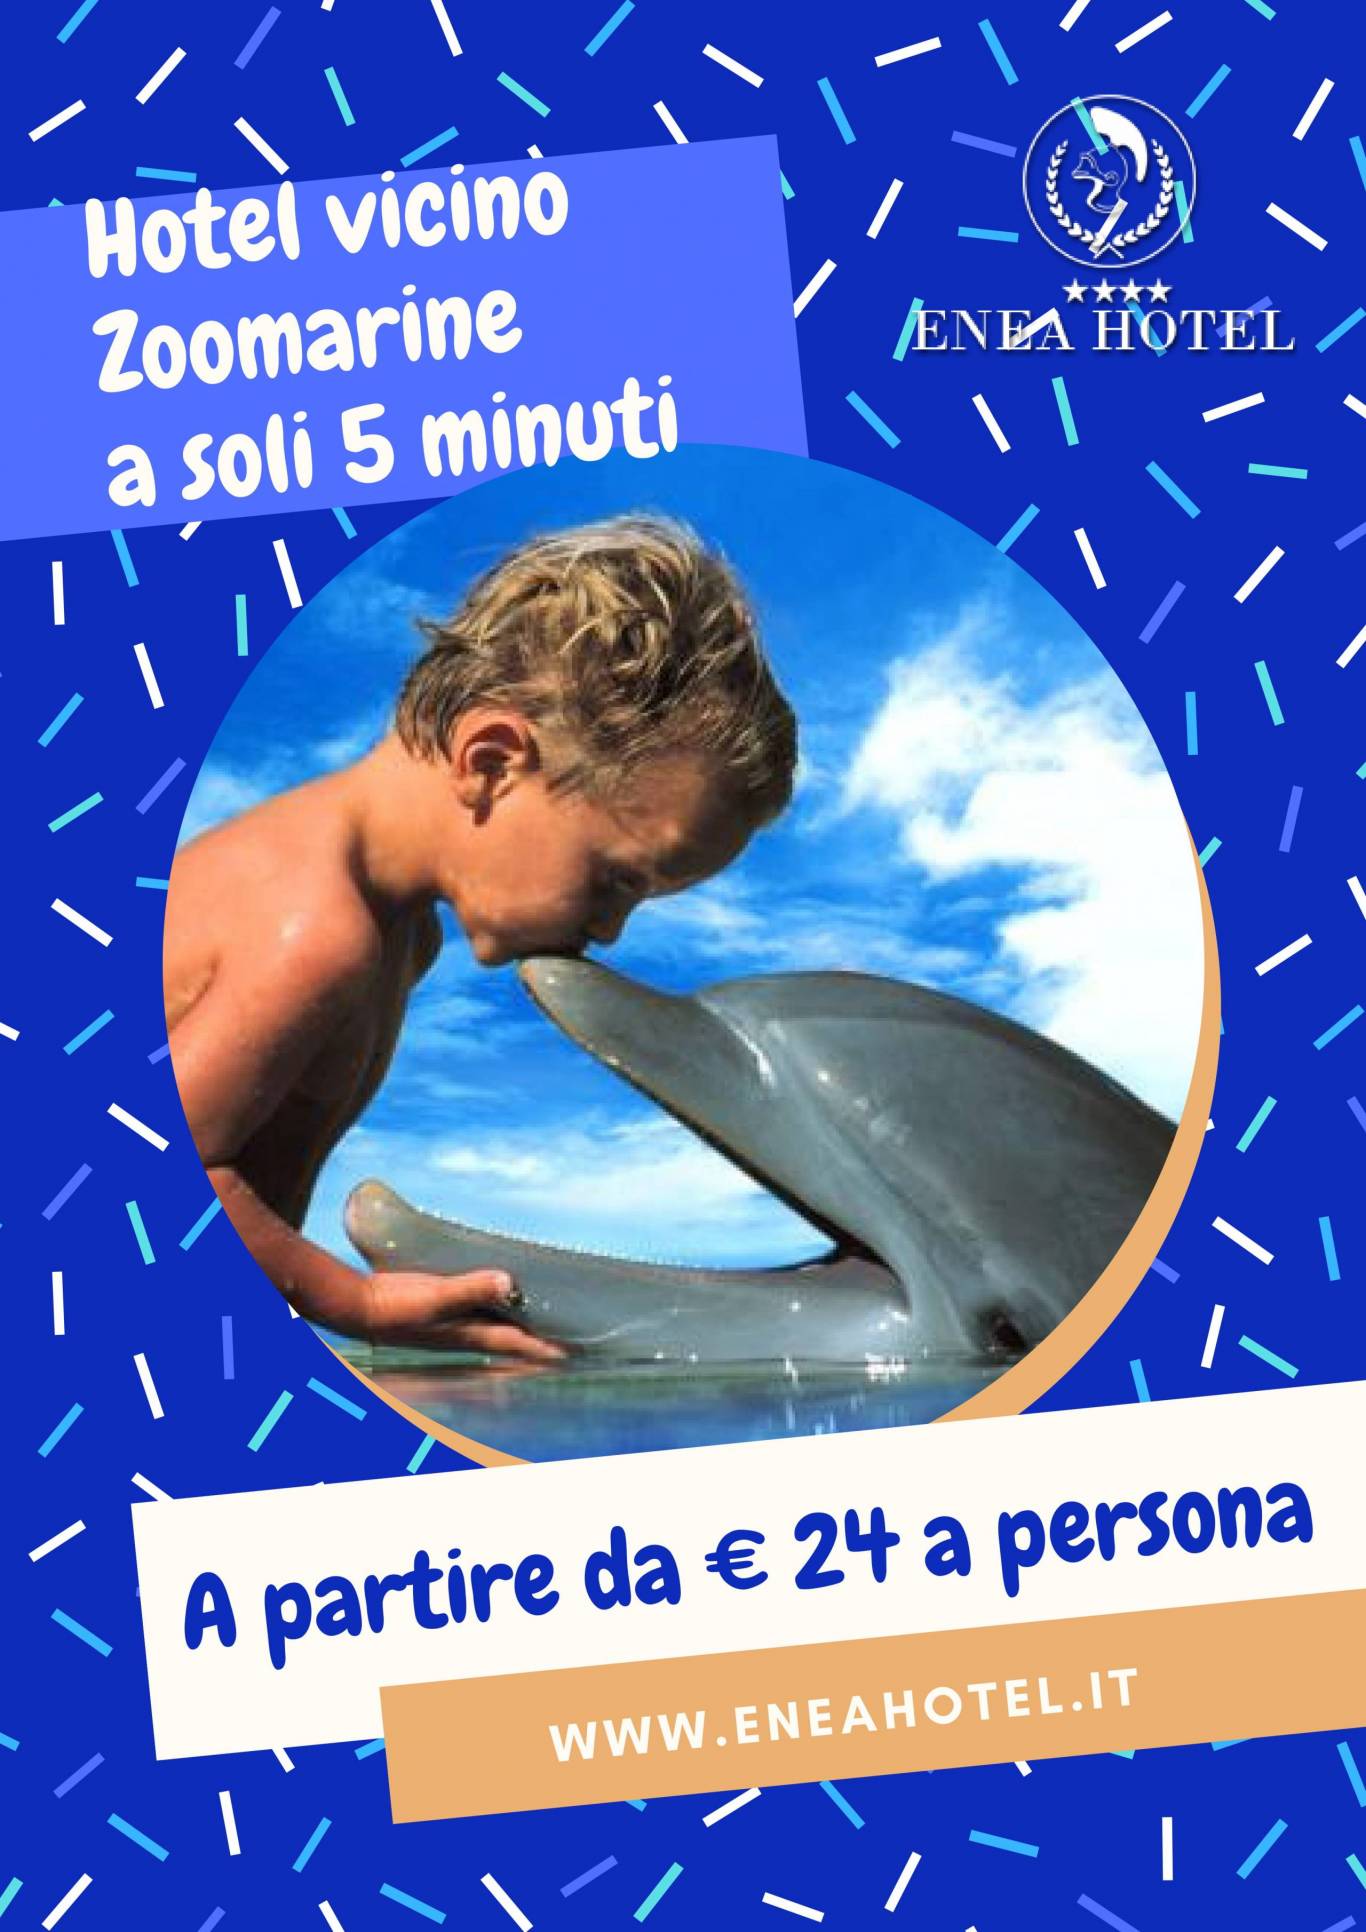 zoomarine-enea-hotel-1